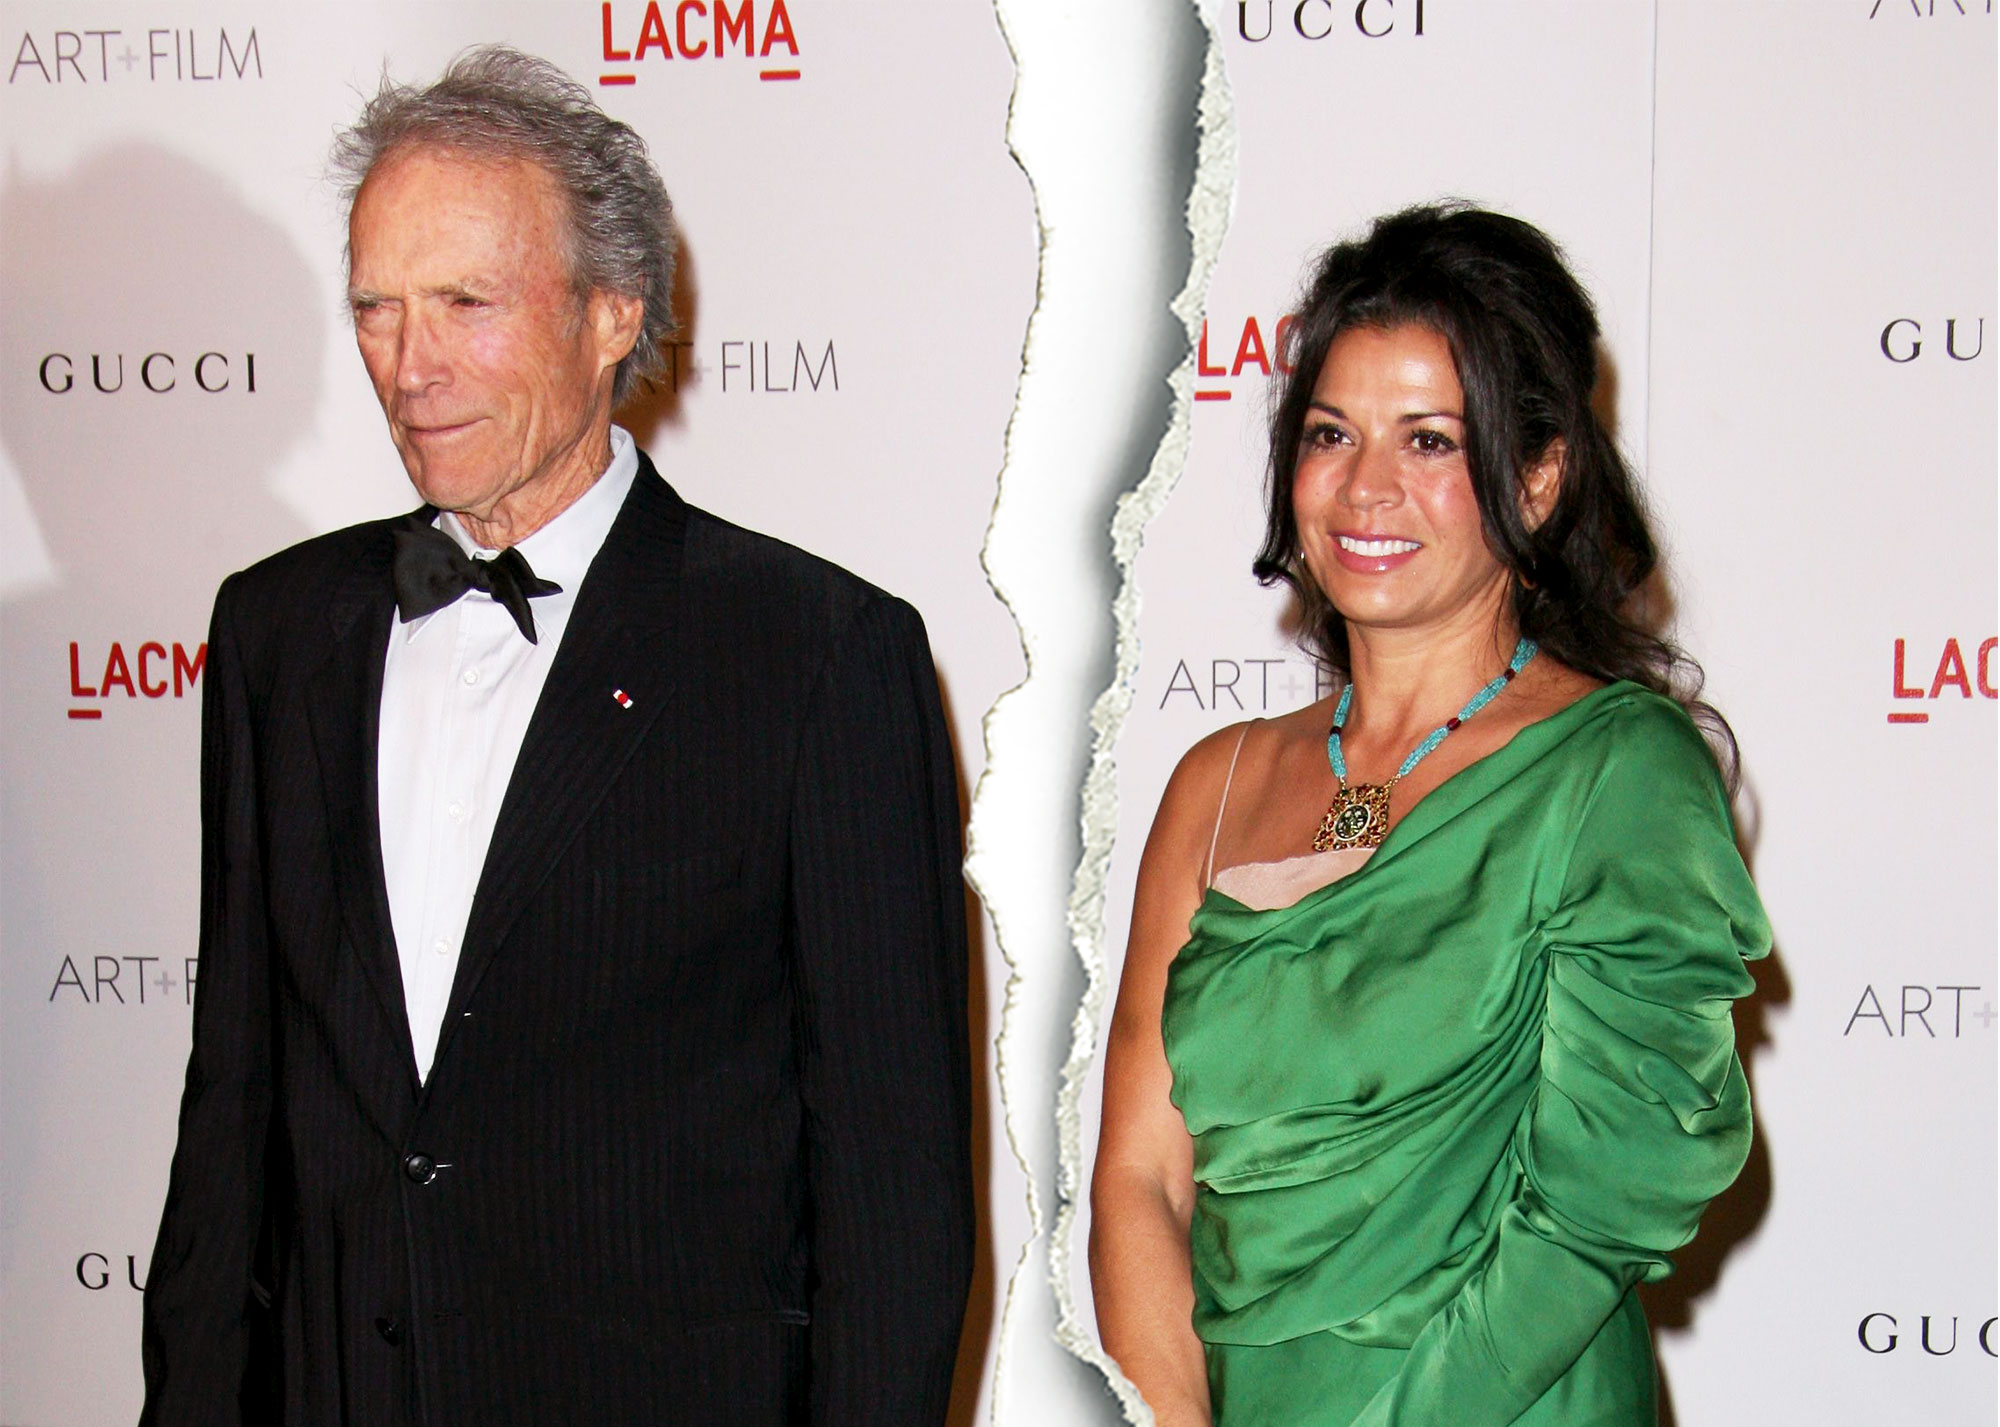 Clint Eastwood and Dina Ruiz